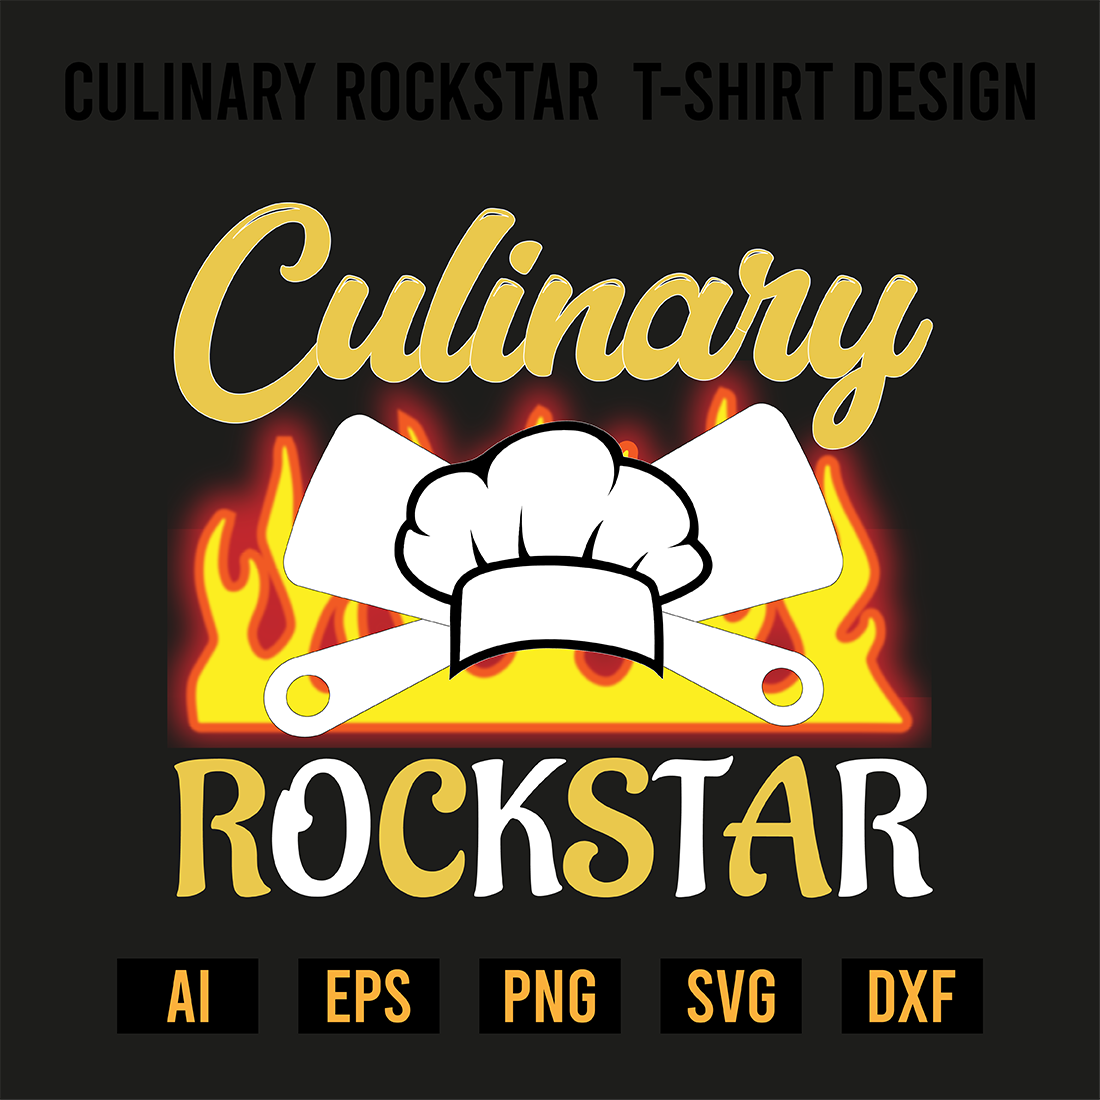 Culinary Rockstar T-Shirt Design preview image.